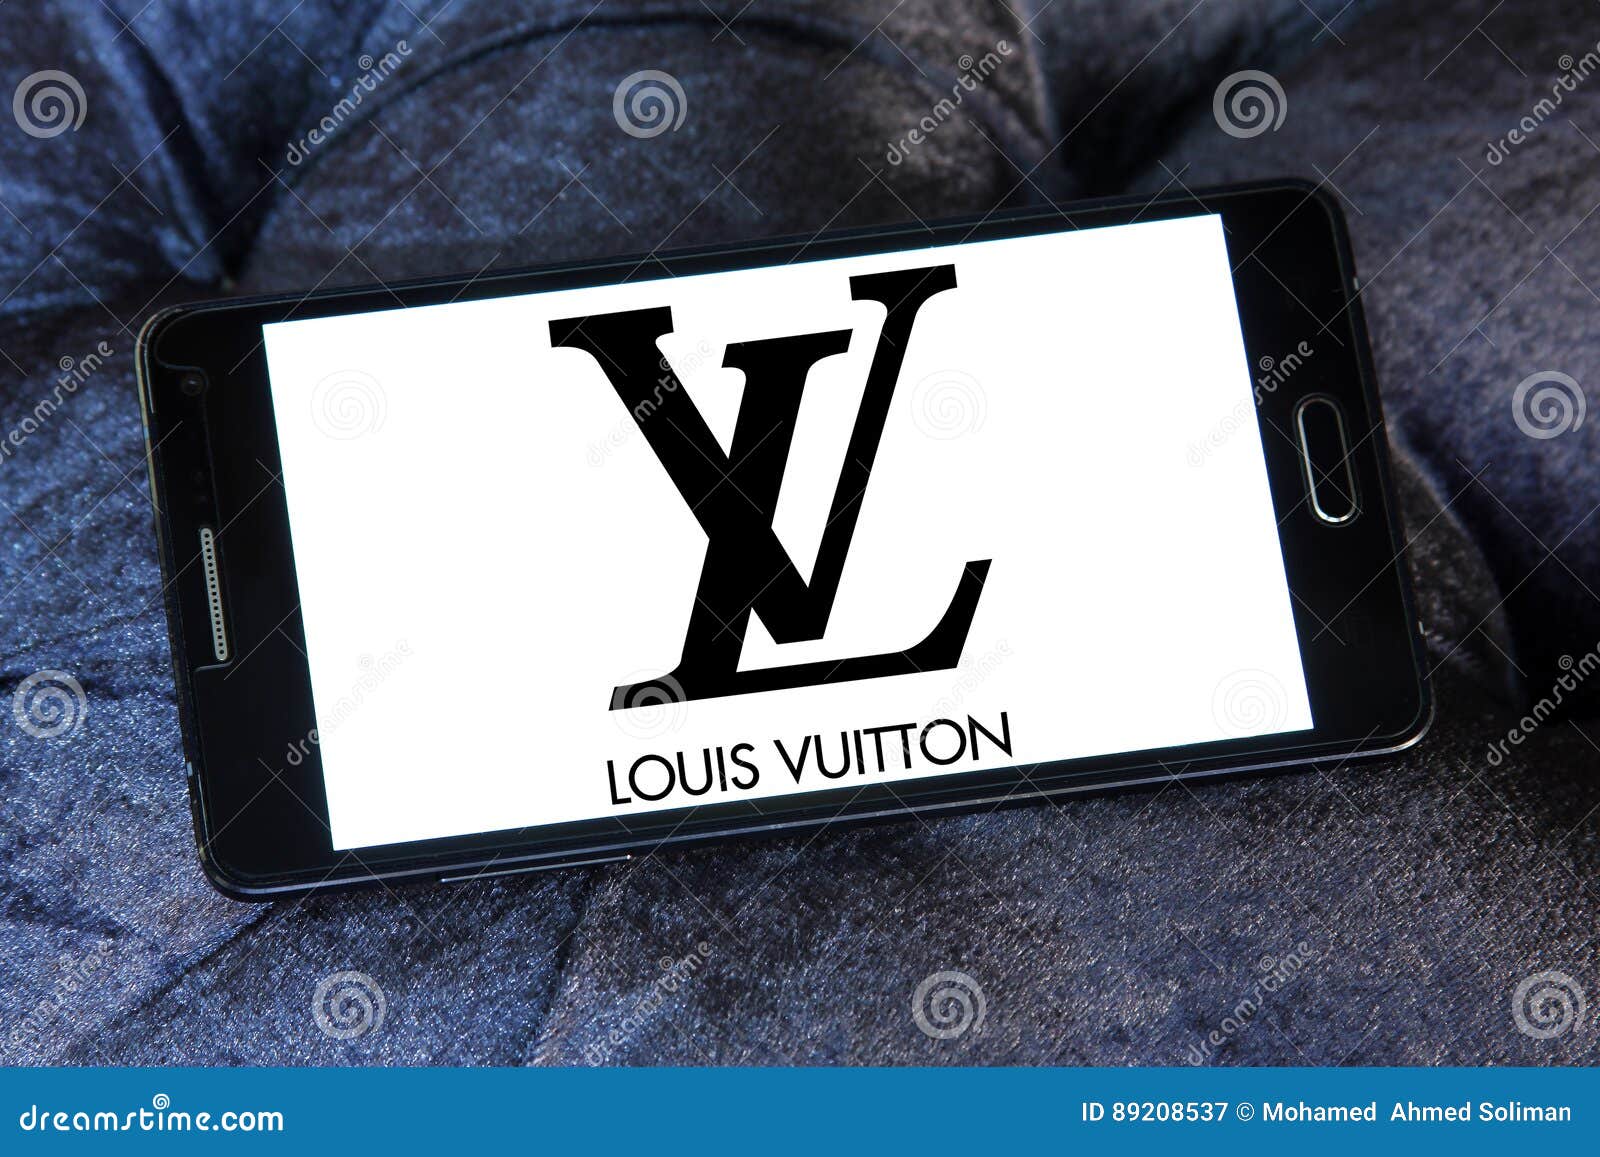 Louis vuitton logo editorial photography. Image of samsung - 89208537